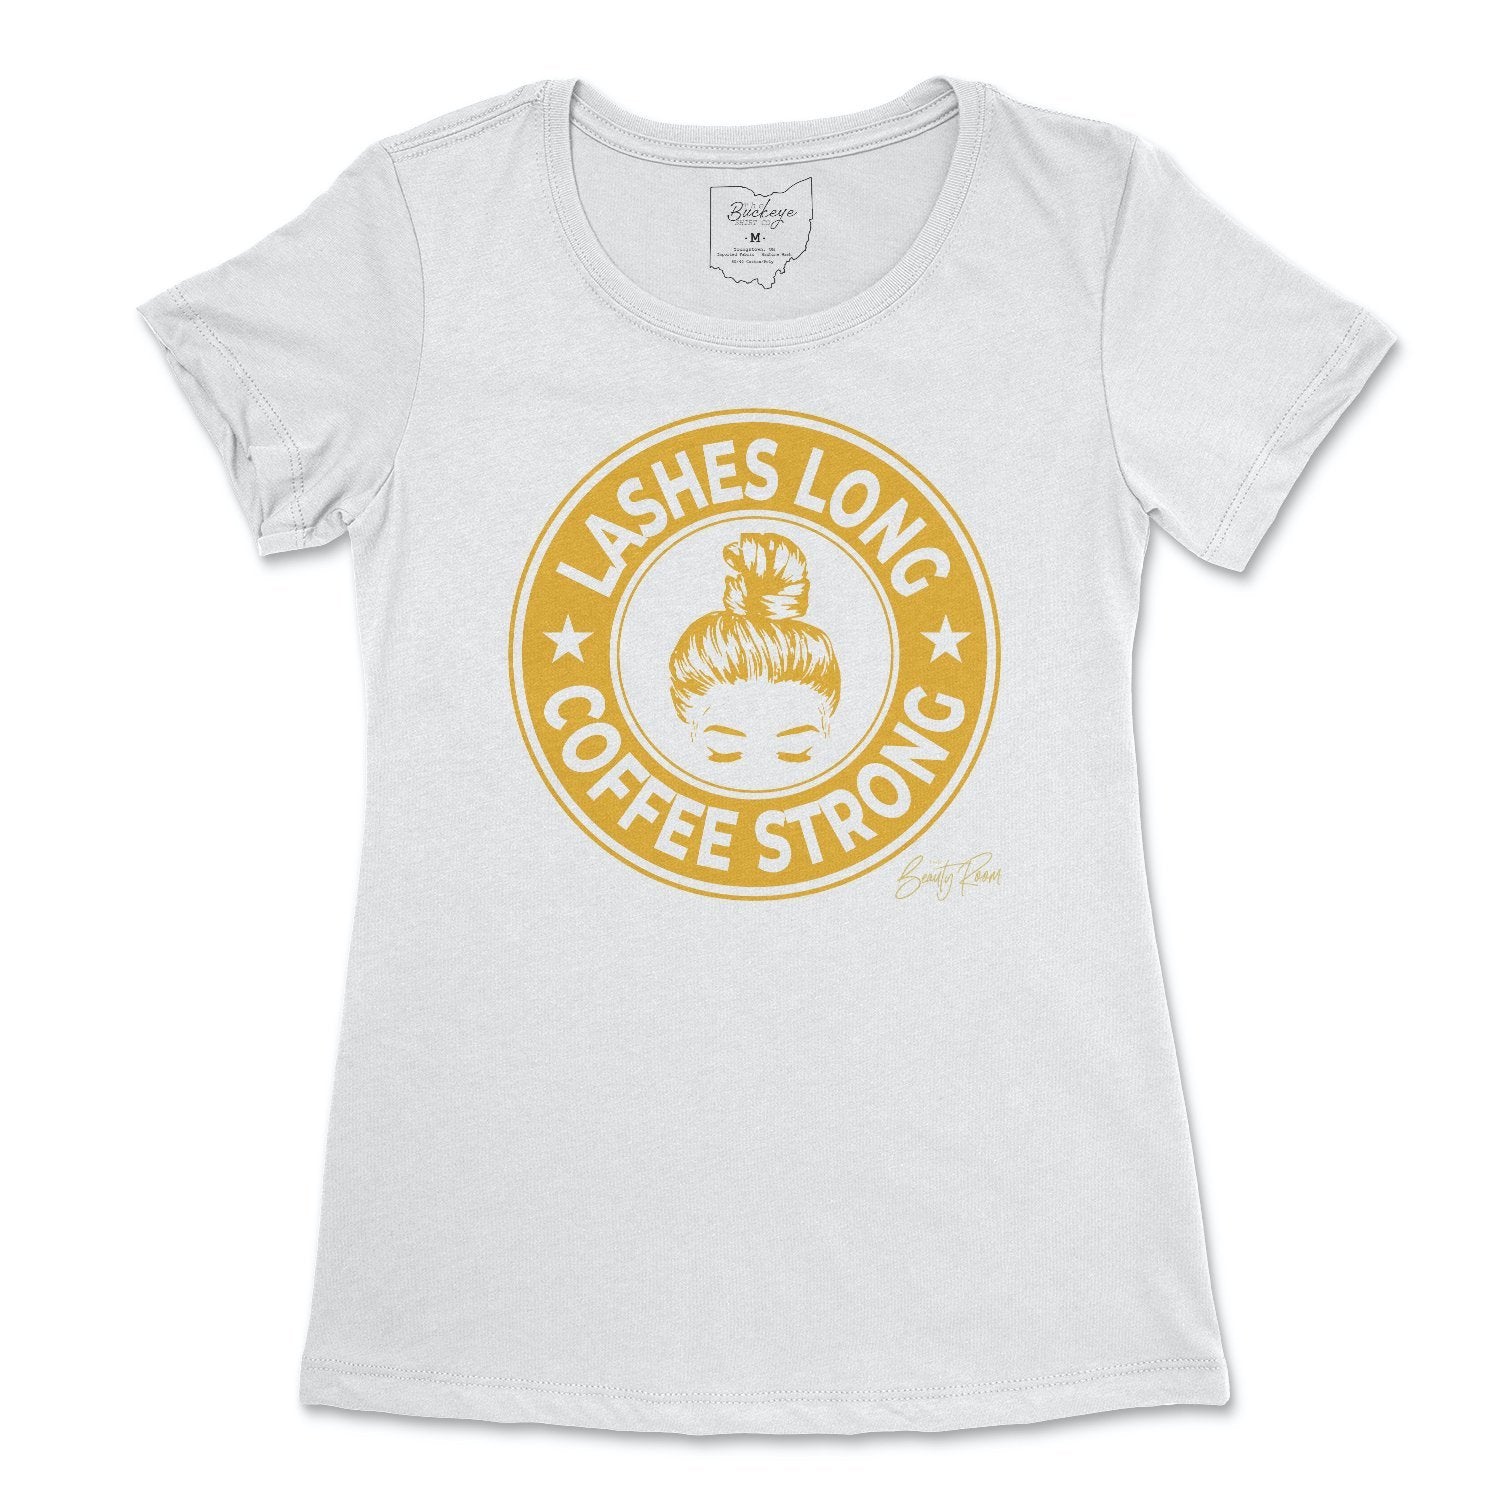 Lashes Long Coffee Strong Gold Design T-Shirt - Buckeye Shirt Co.